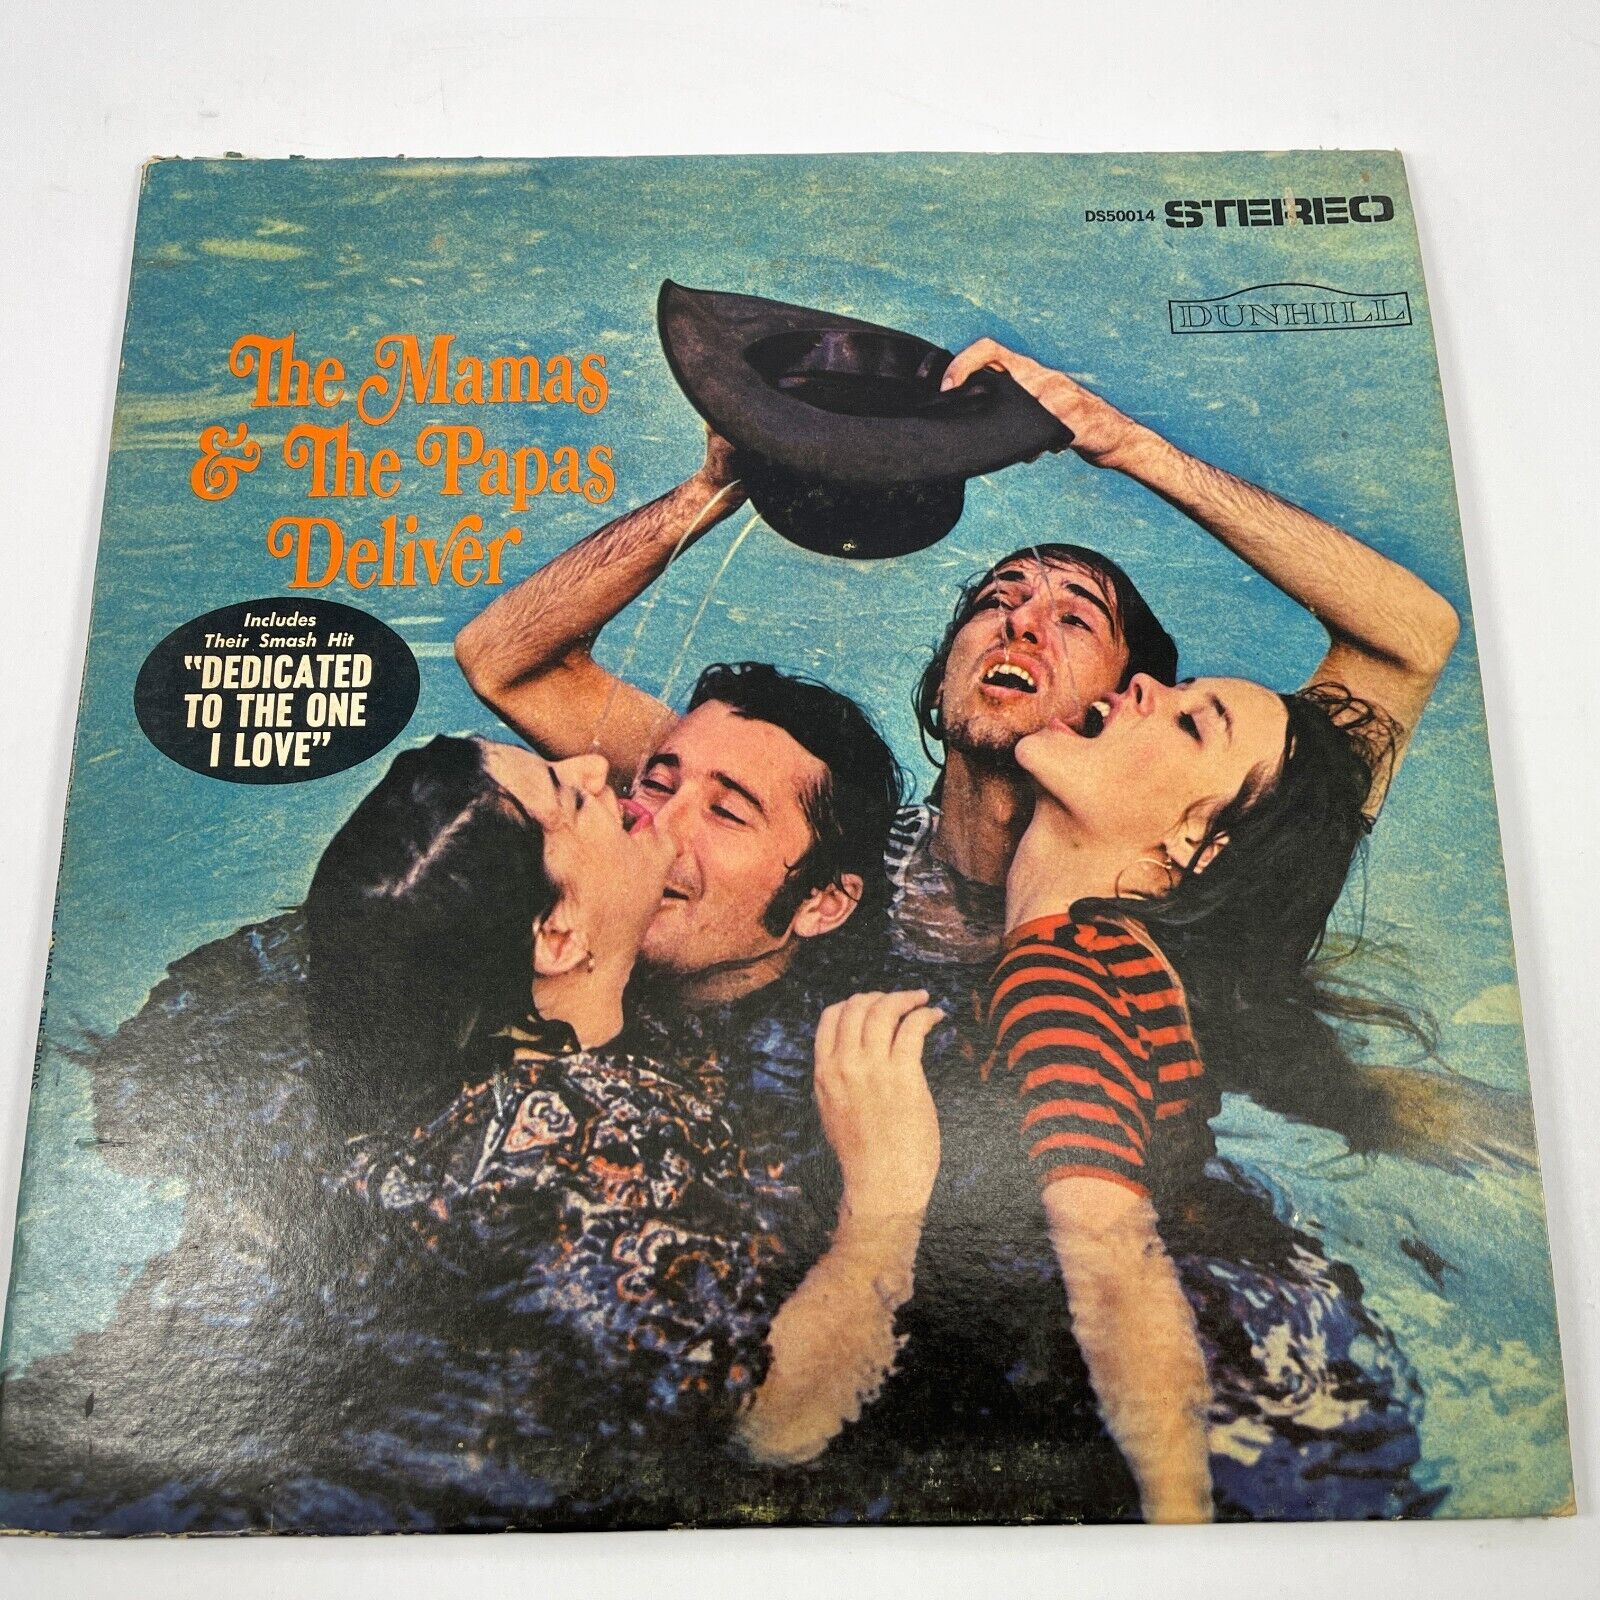 The Mamas And The Papas Deliver  Record Album Vinyl LP